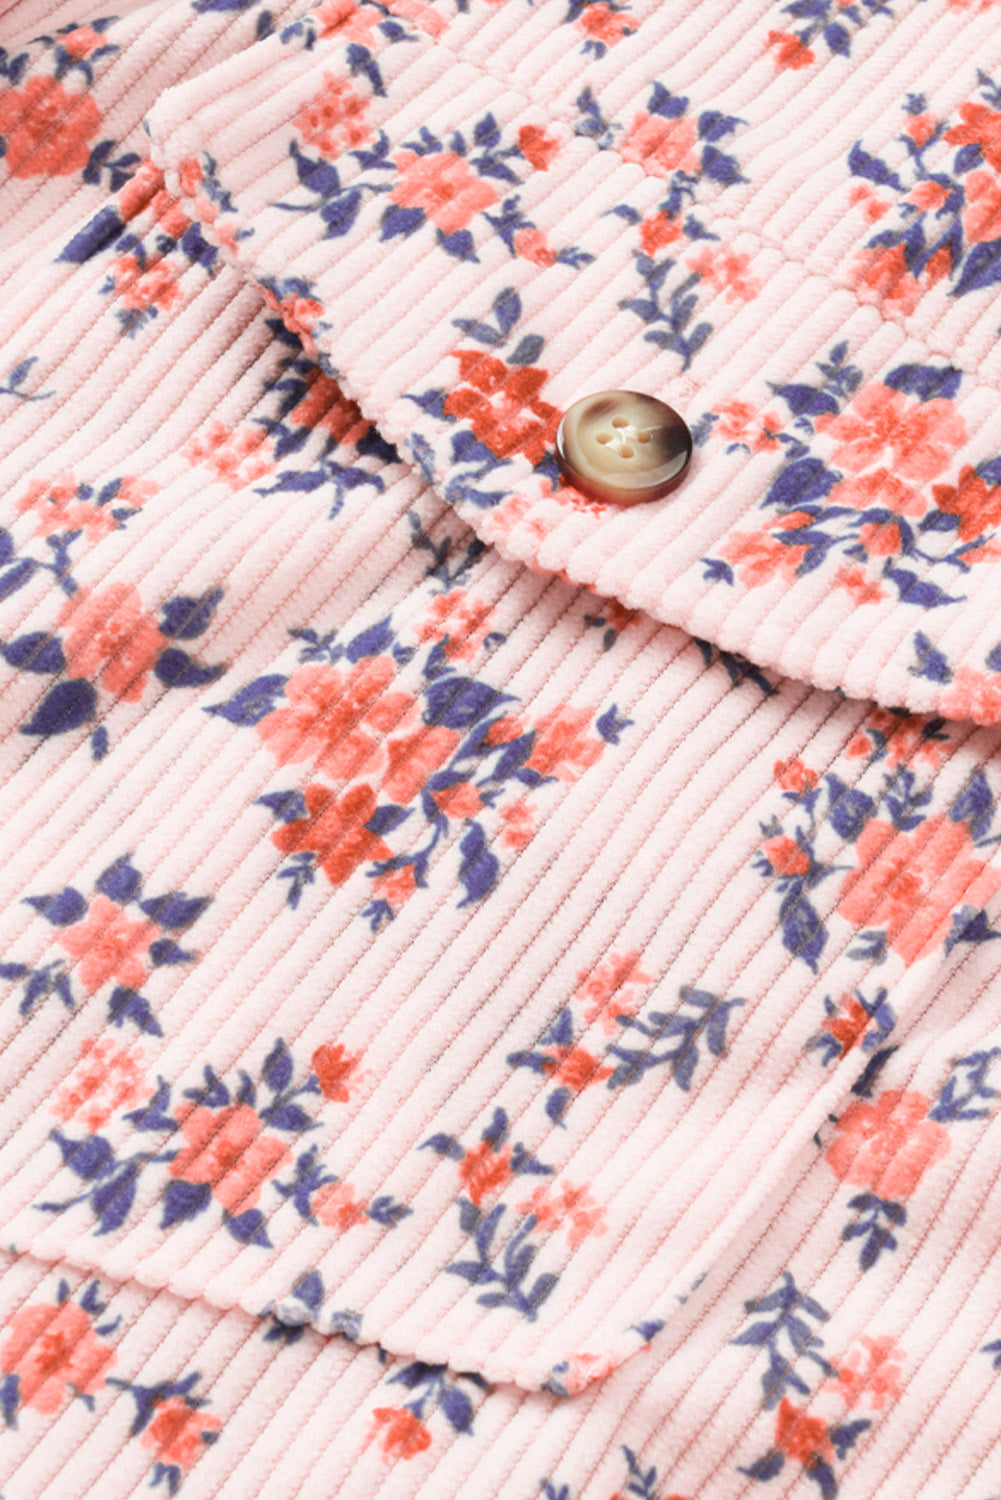 Pink Short Sleeve Flap Pockets Shirt Floral Dress